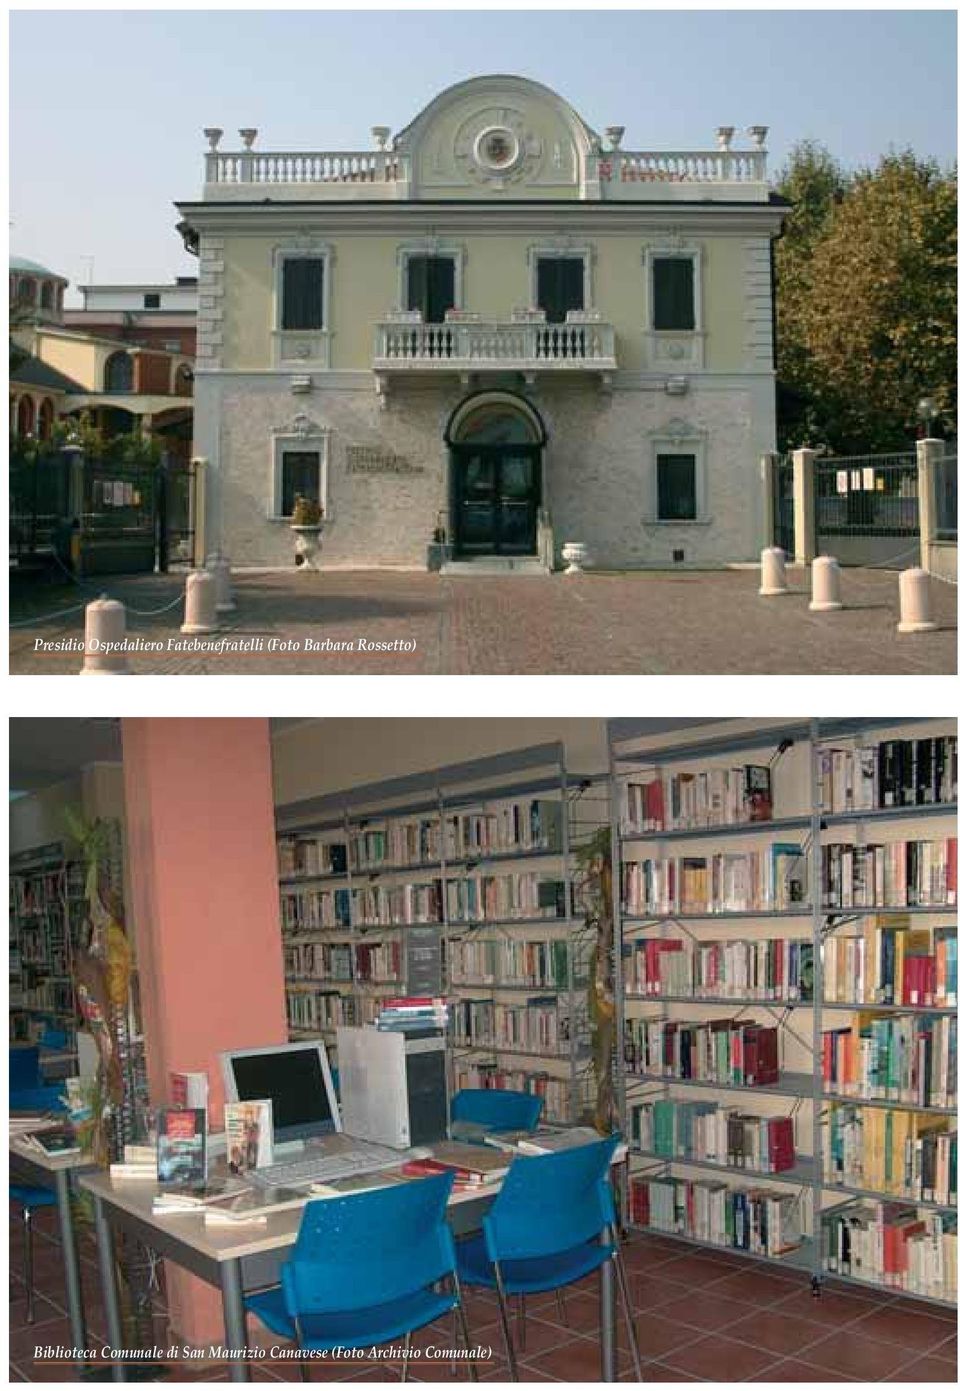 Rossetto) Biblioteca Comunale di